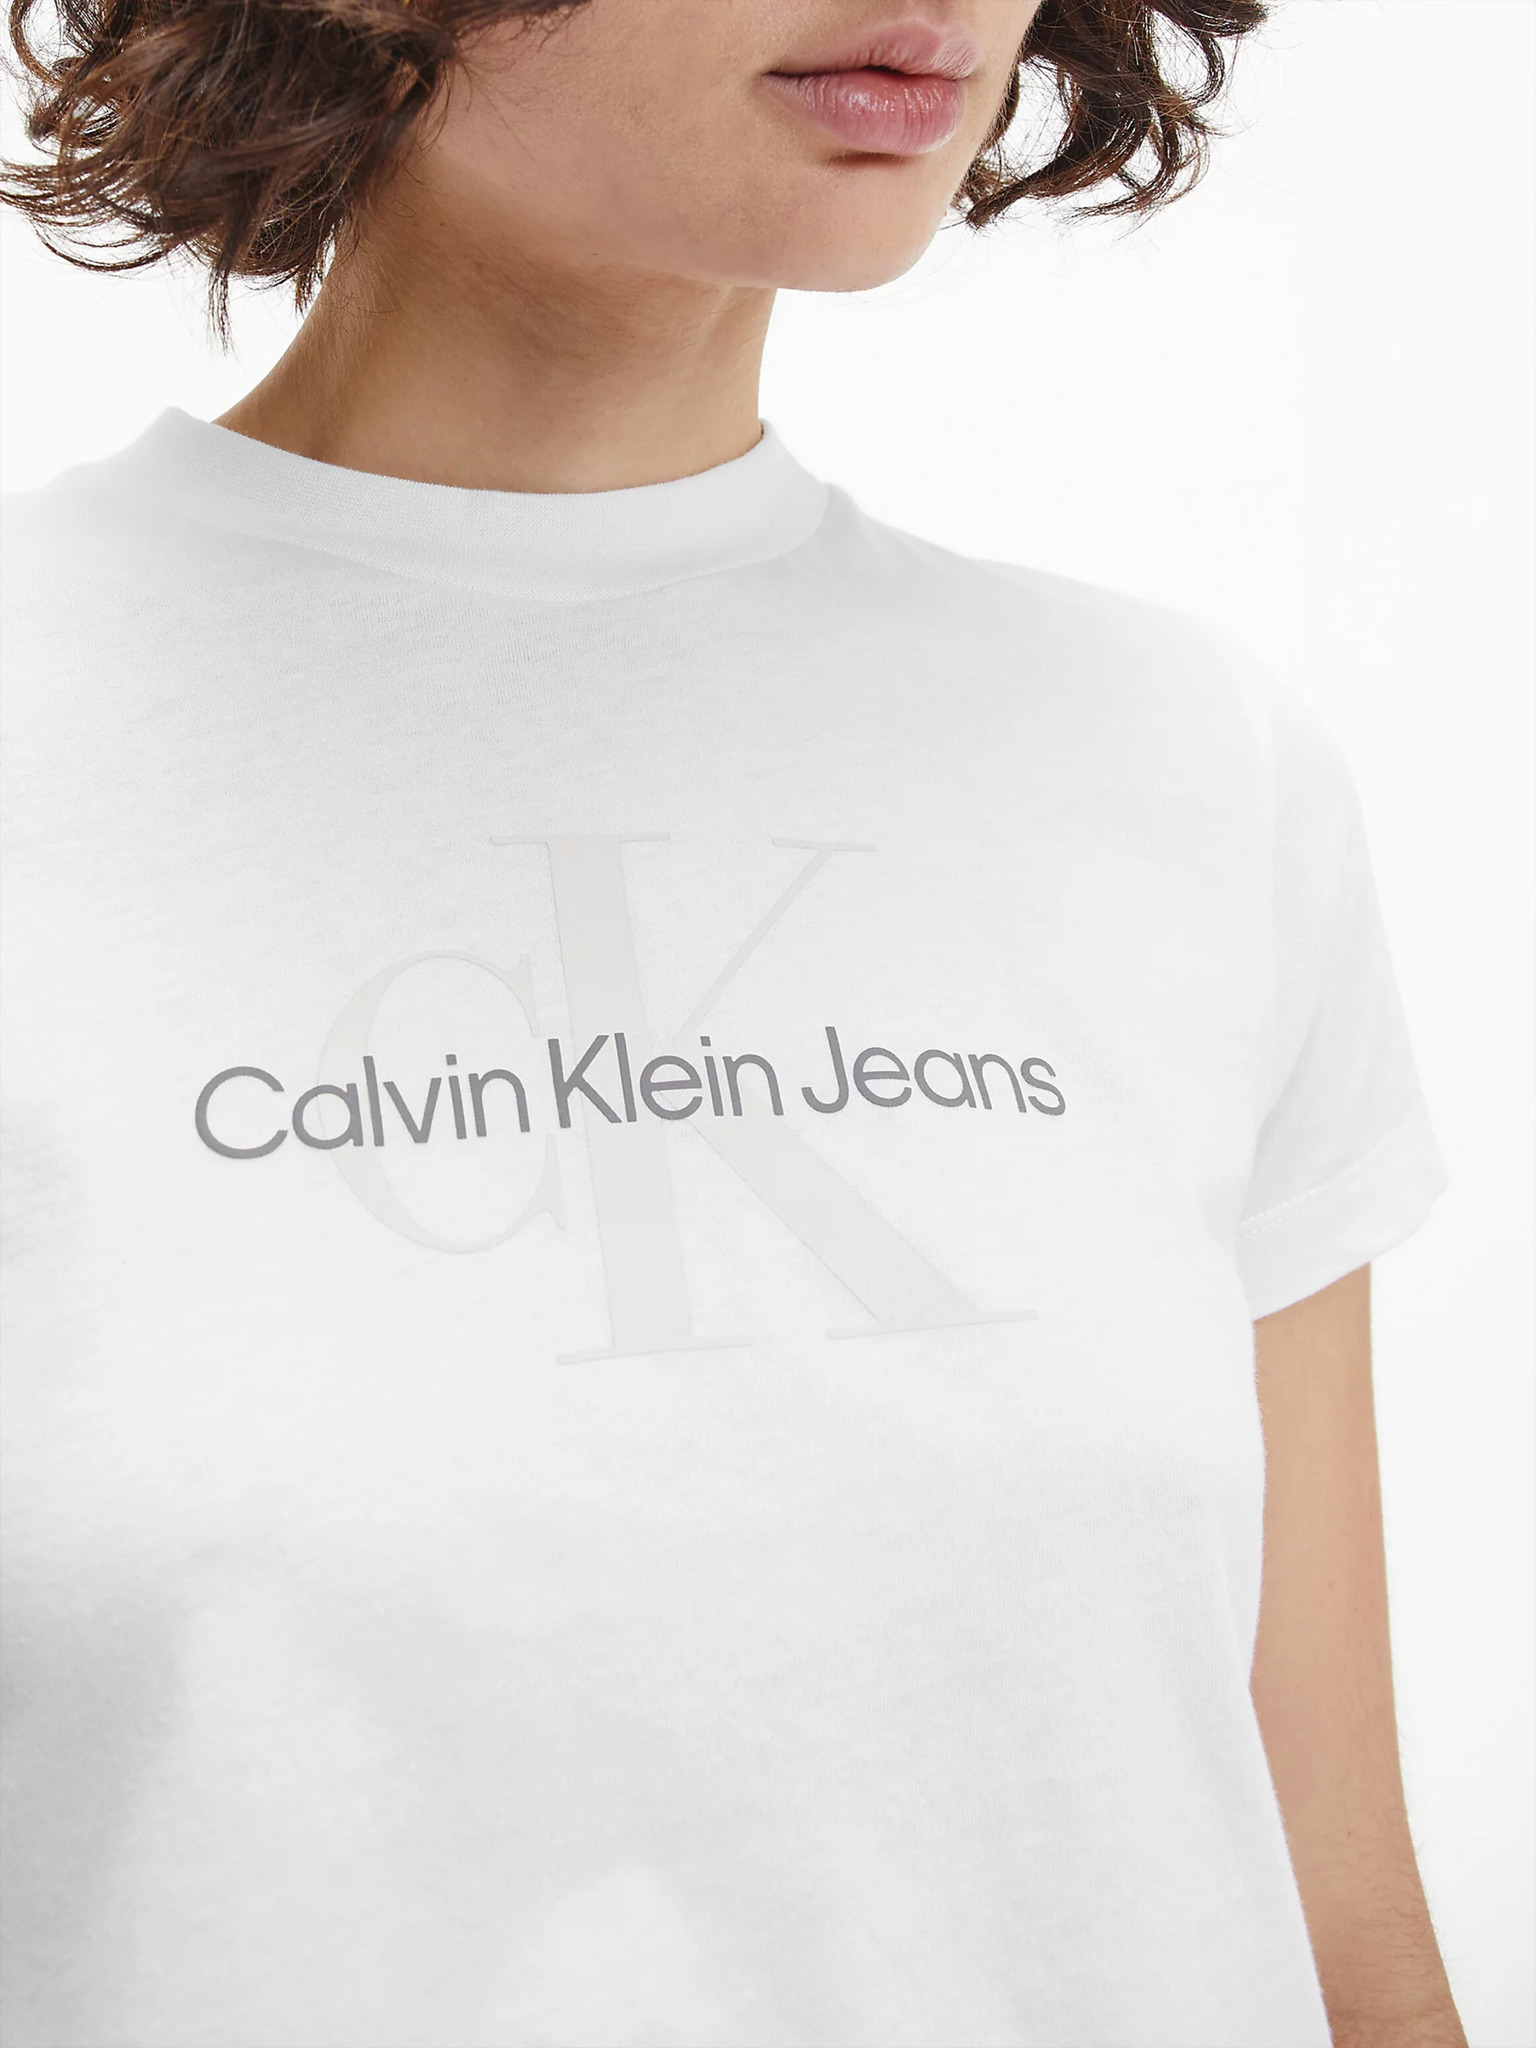 Jeans - Klein T-shirt Calvin Seasonal Monogram Baby